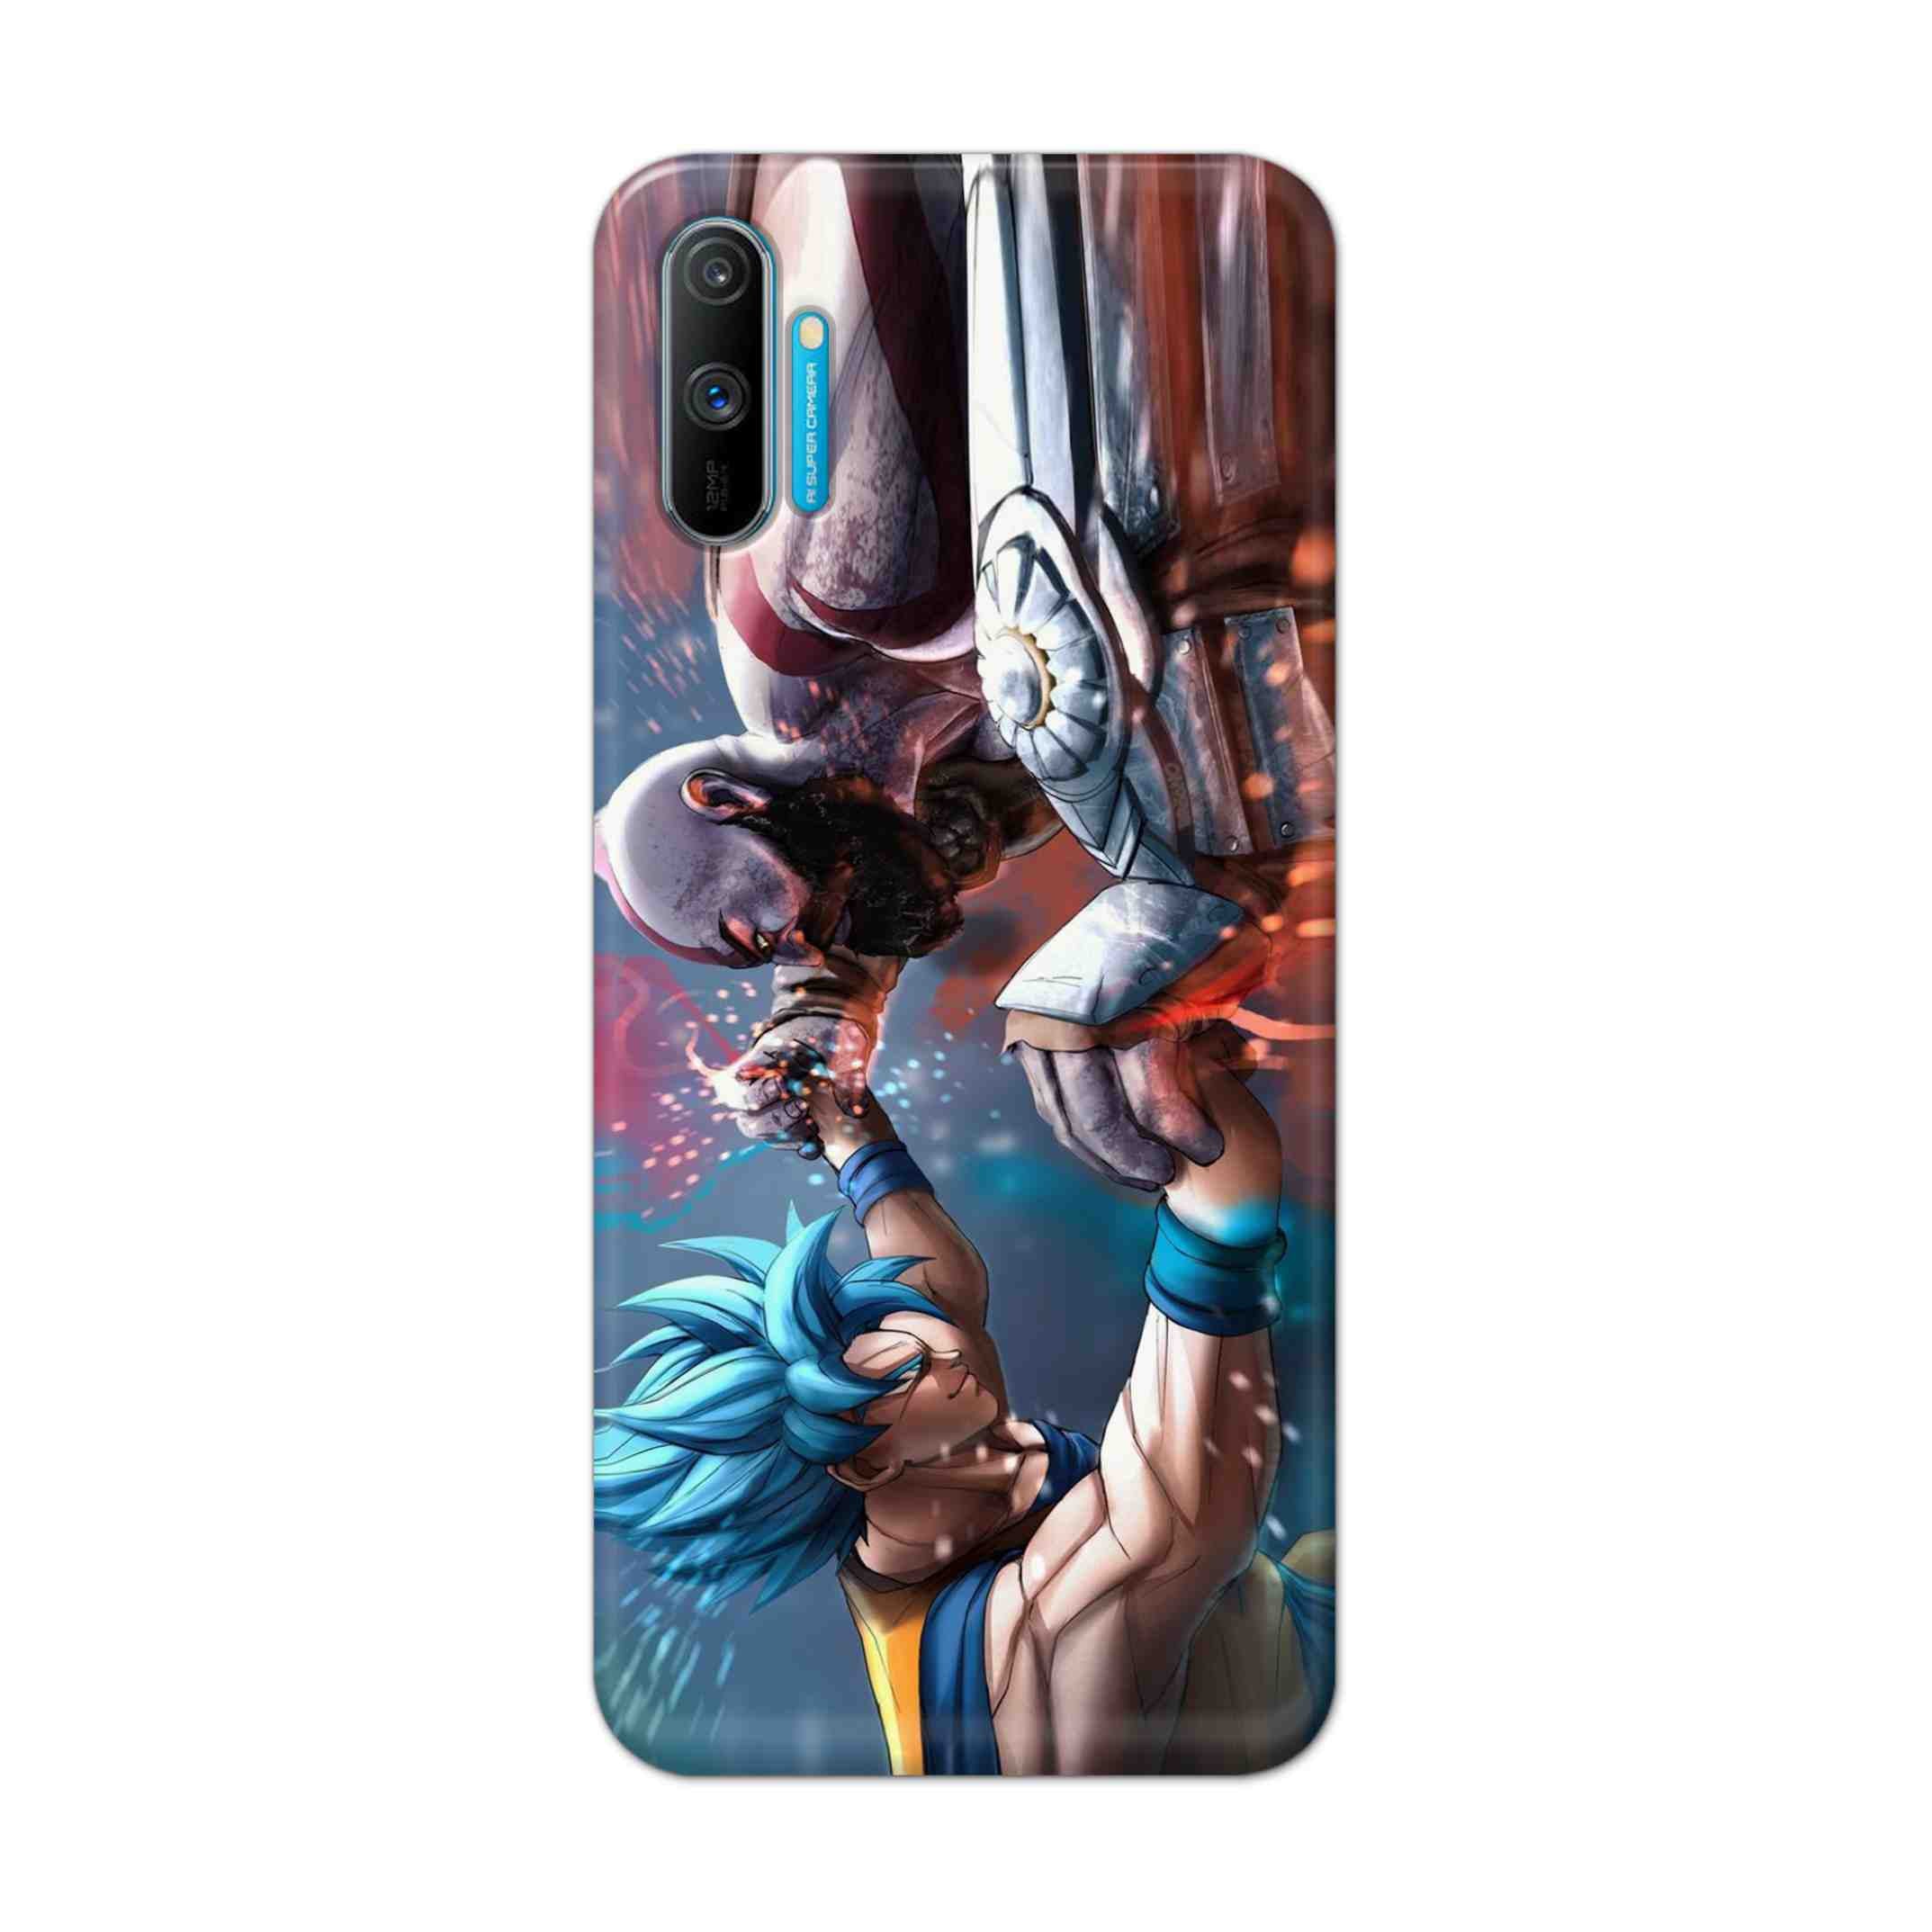 Buy Goku Vs Kratos Hard Back Mobile Phone Case Cover For Realme C3 Online